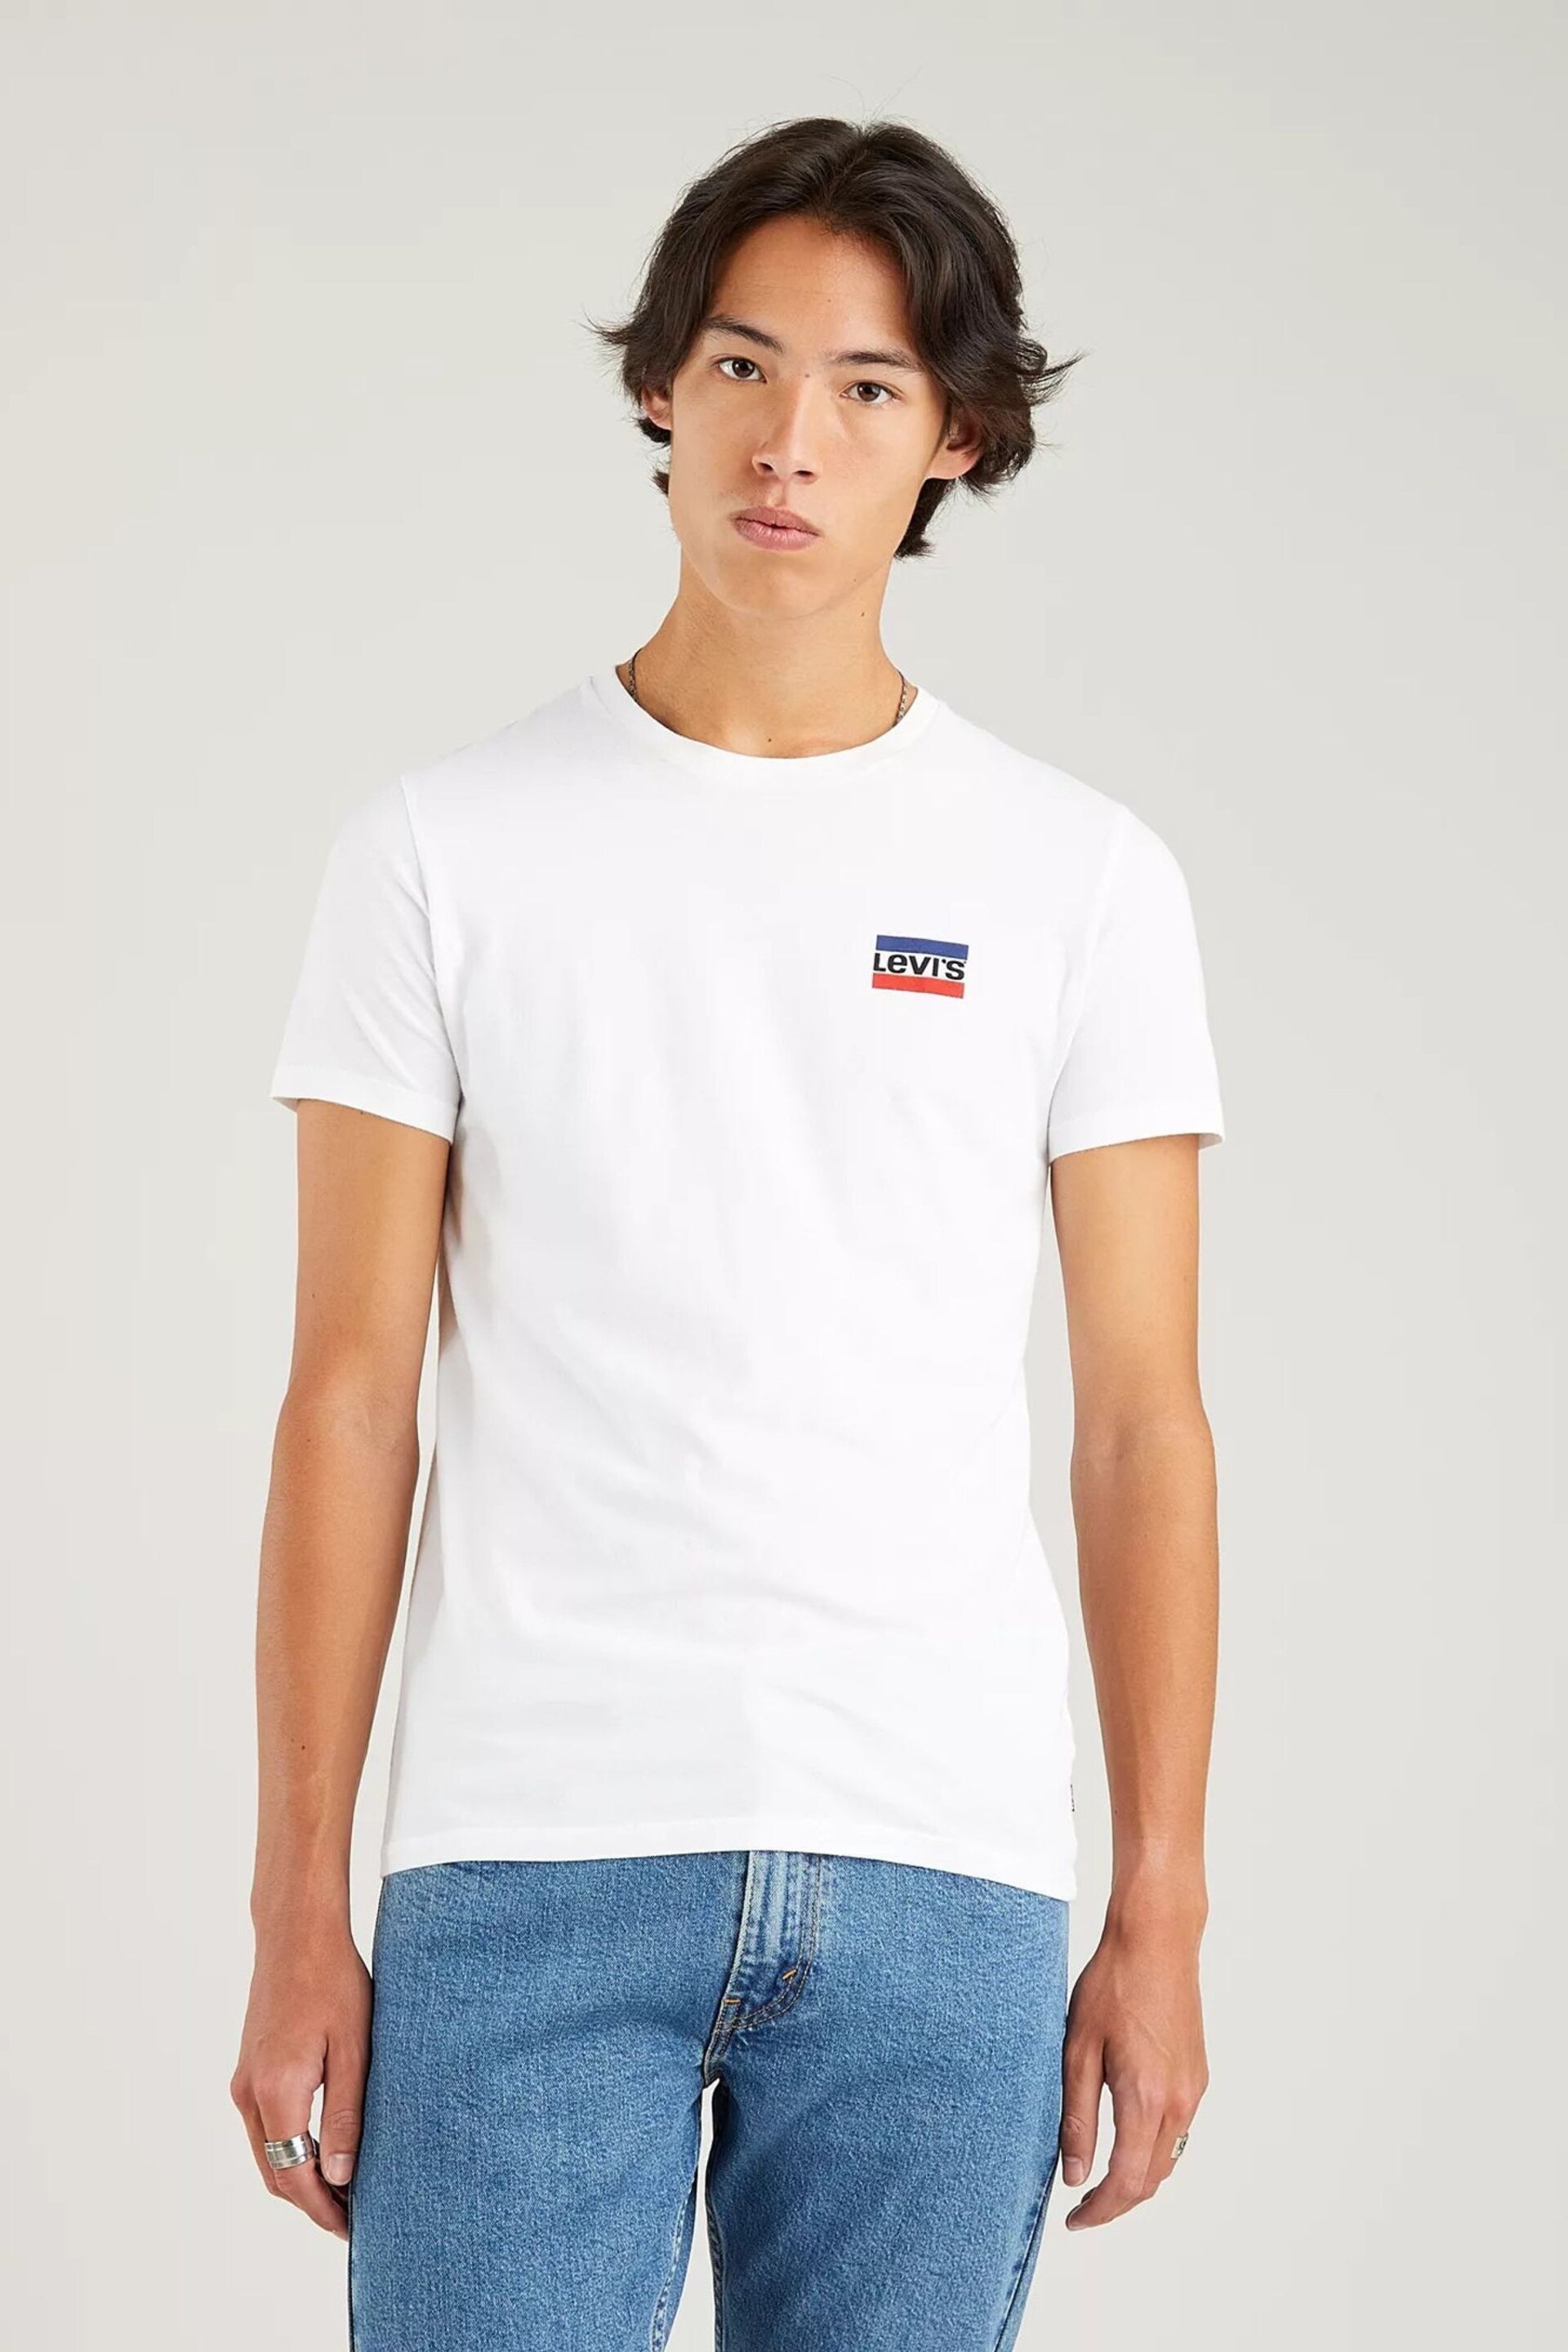 Levi's® White/Blue Mini Crew Neck Sportswear T-Shirts 2 Pack - Image 5 of 7